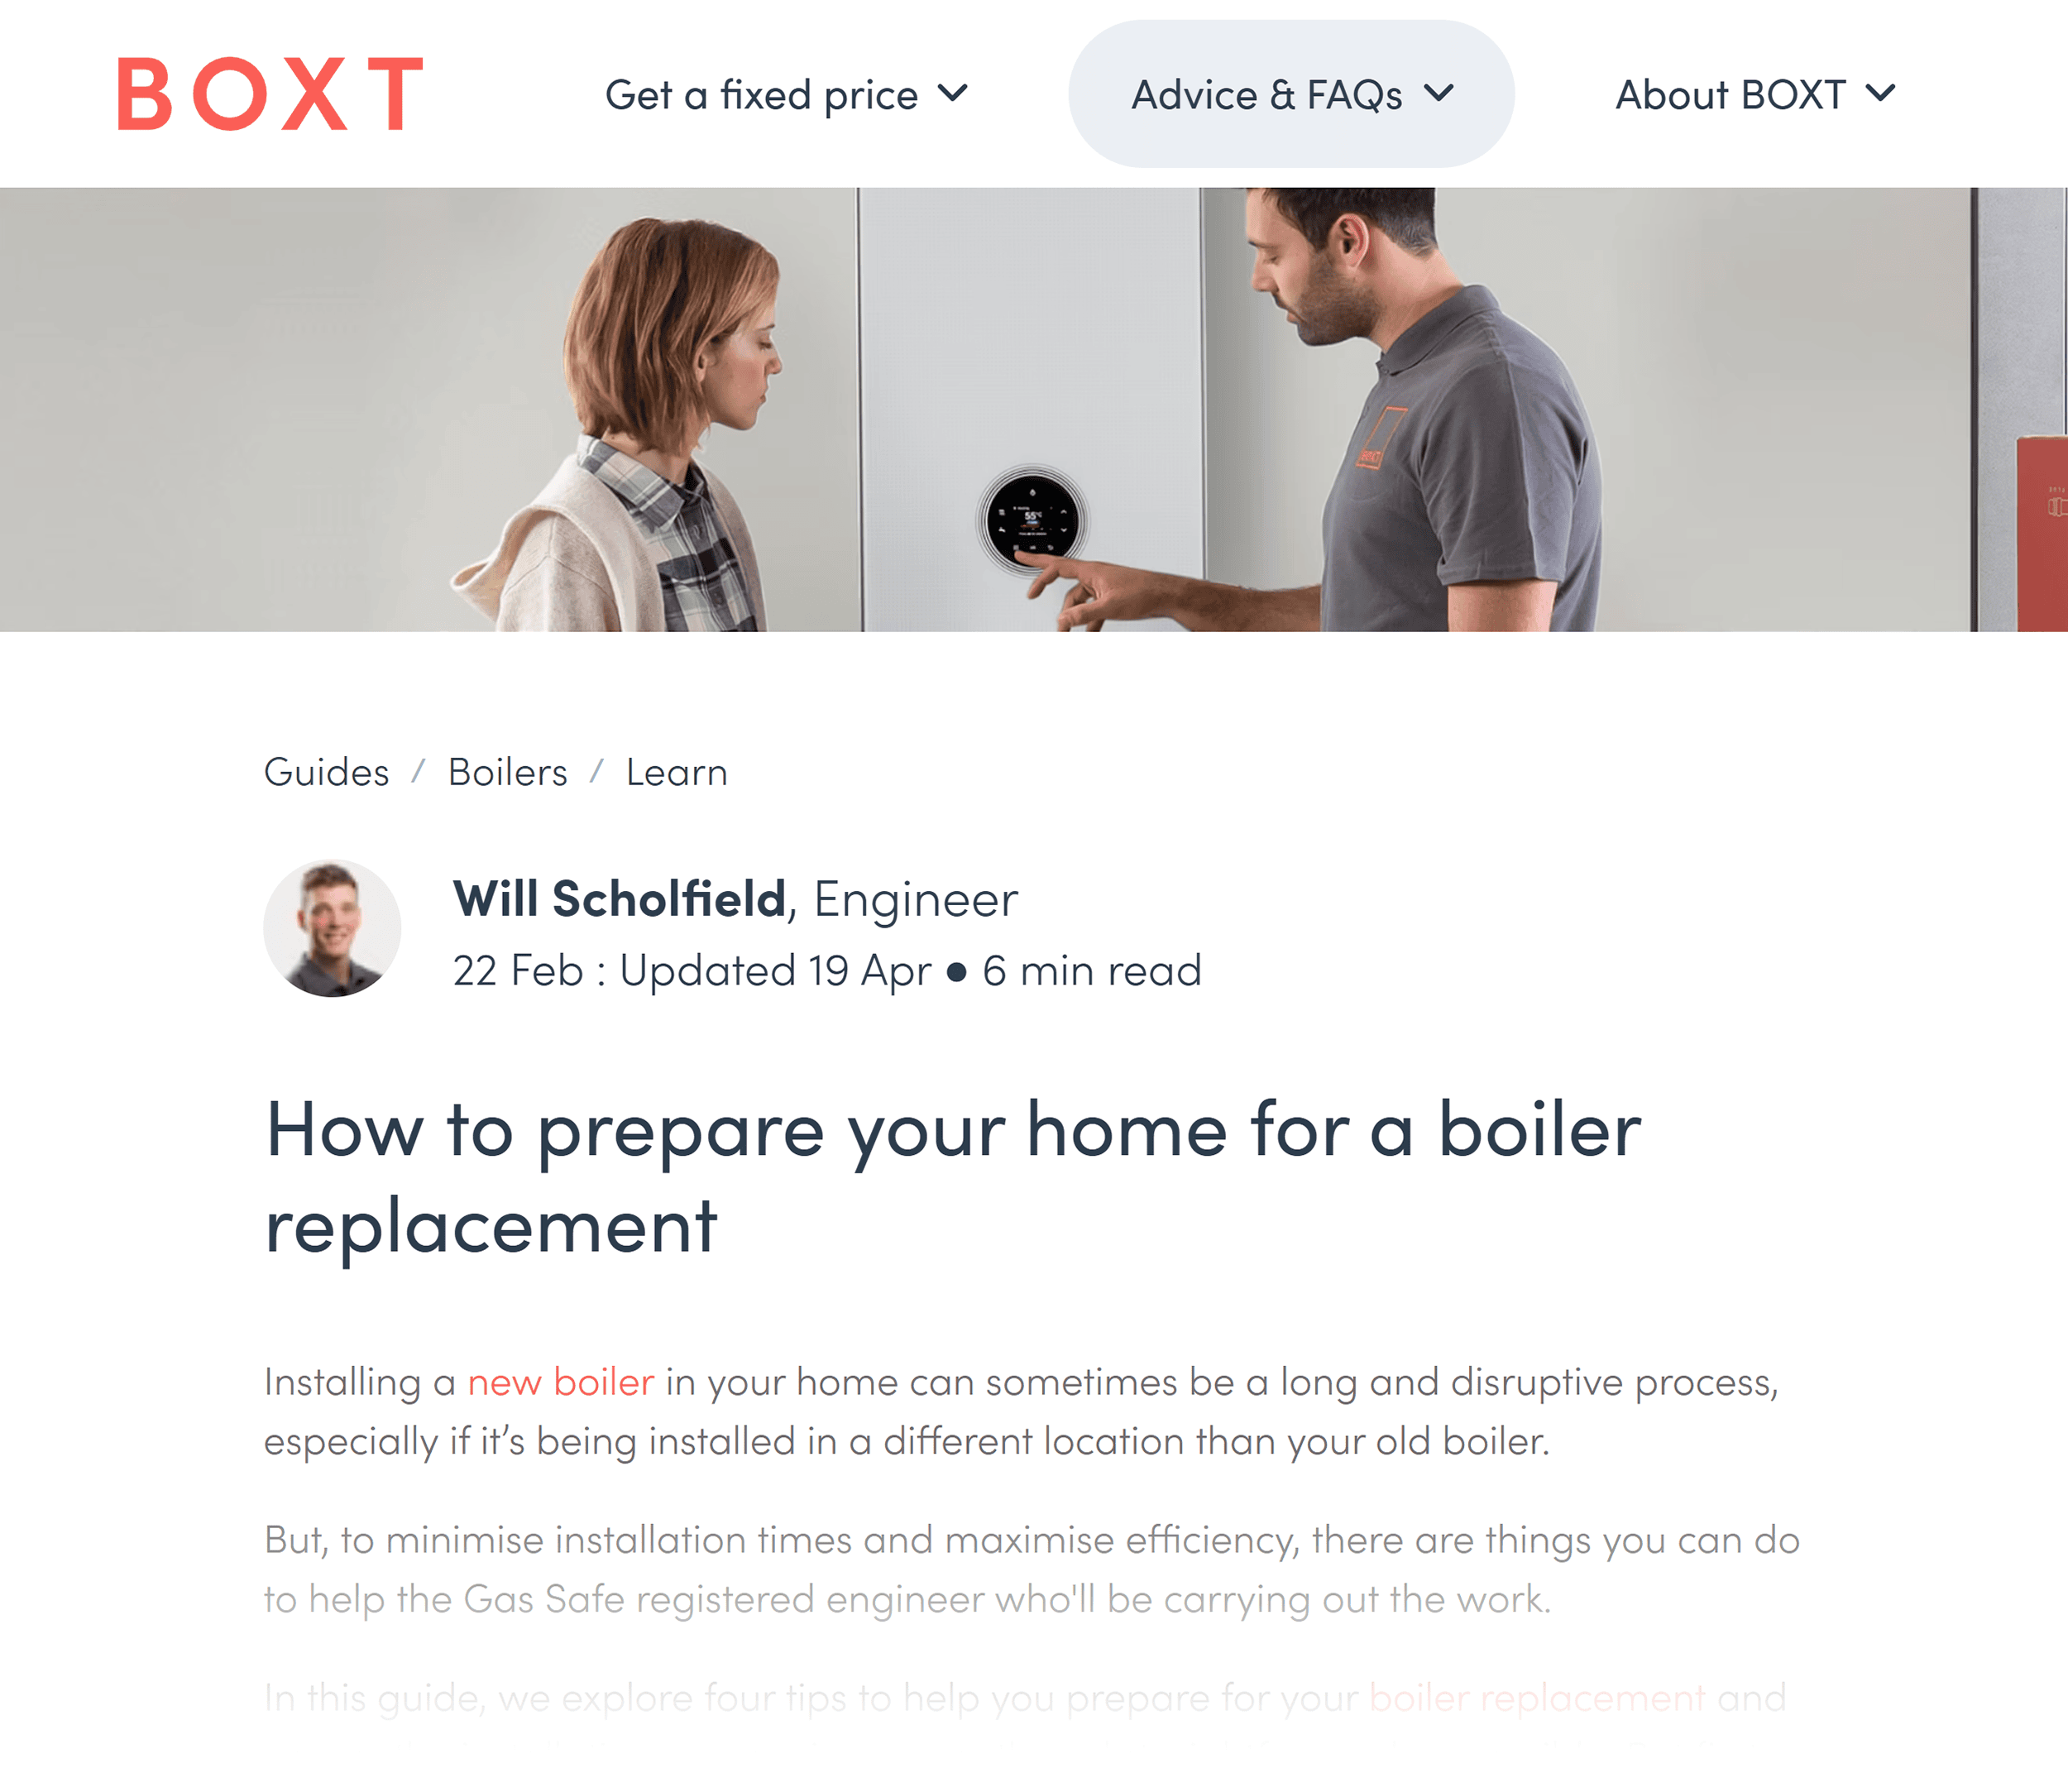 Boxt – Prepare for boiler replacement